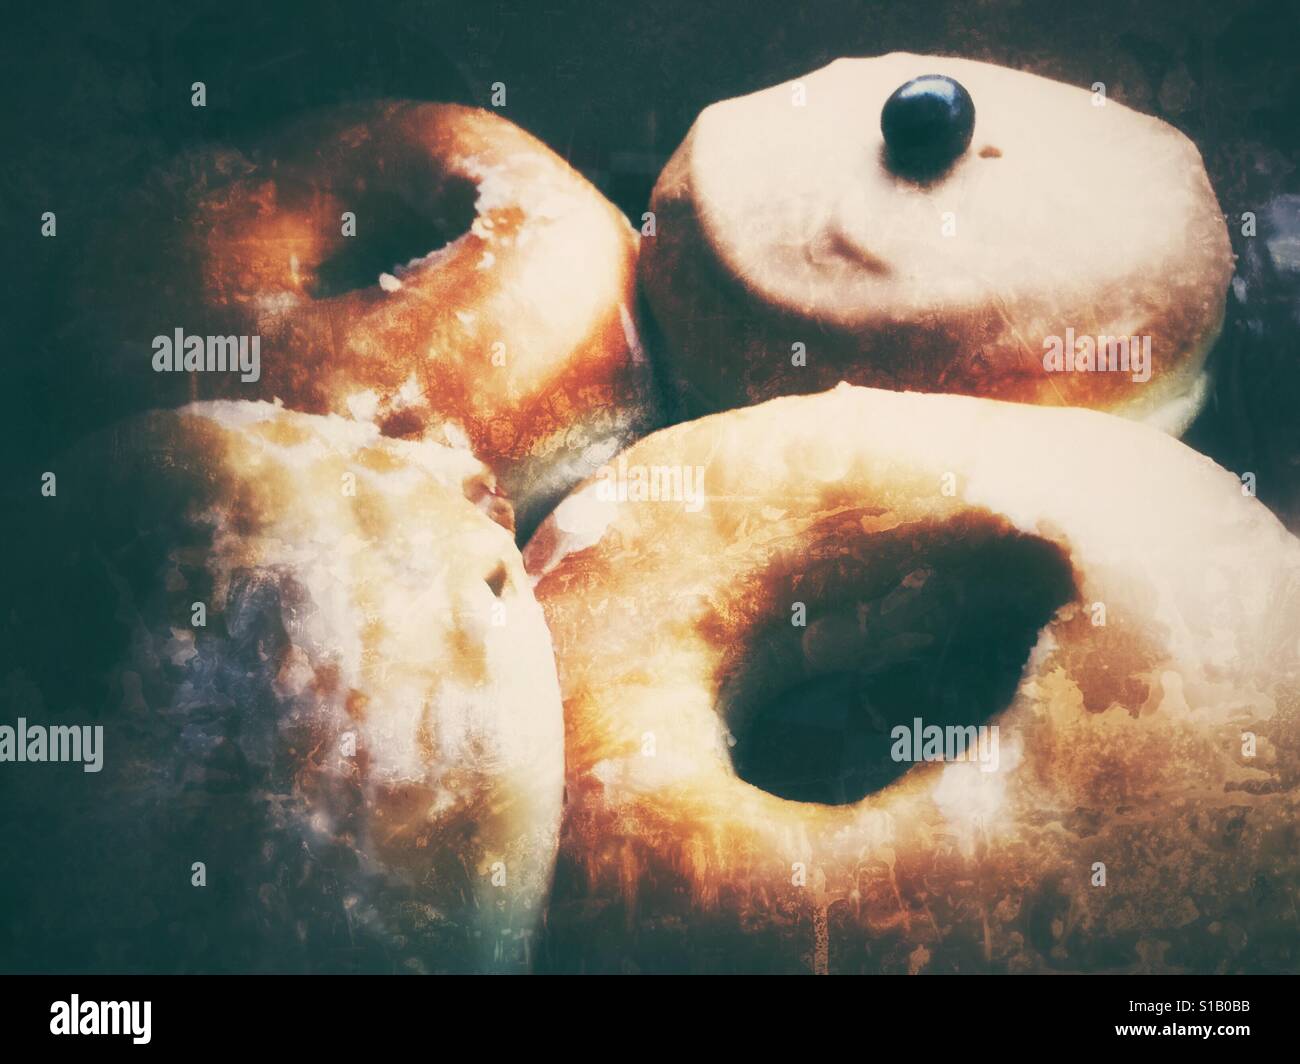 Assortment of glazed doughnuts. Vignette edit. Stock Photo